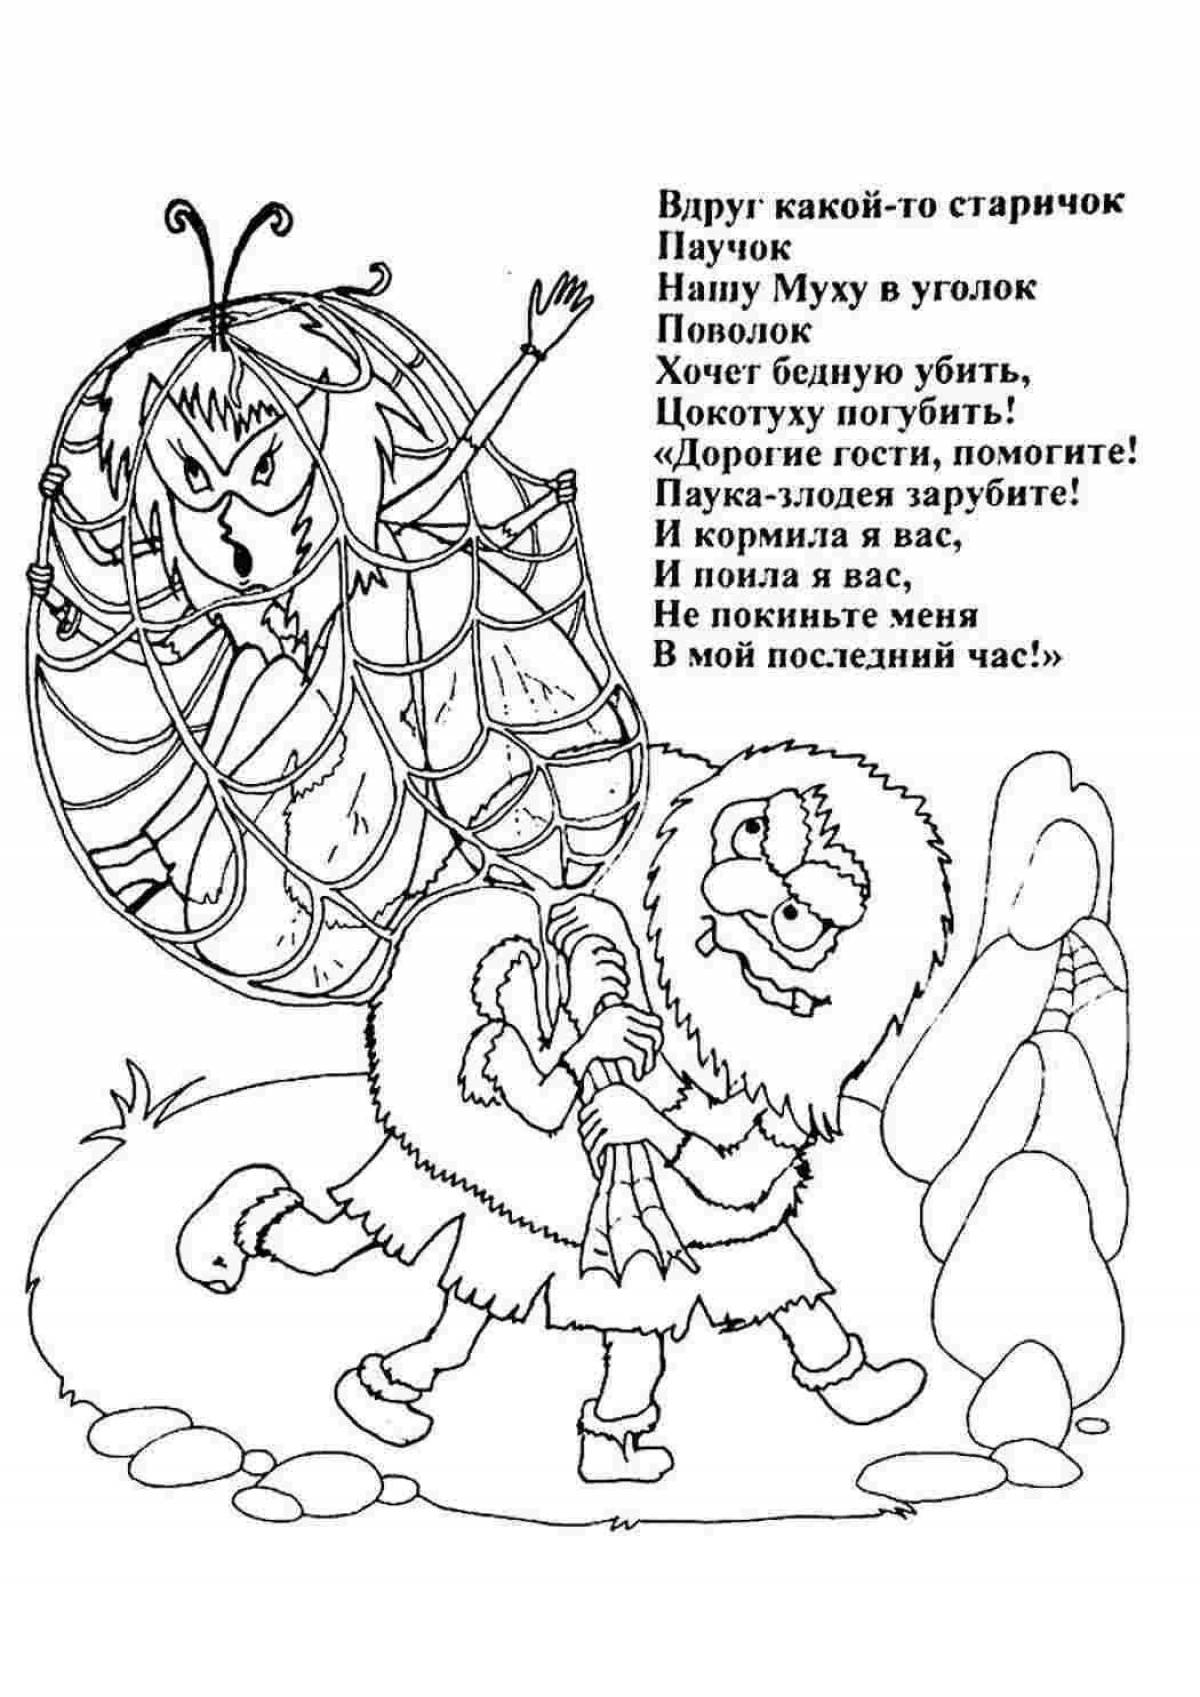 Colorful Chukov's fairy tale coloring book